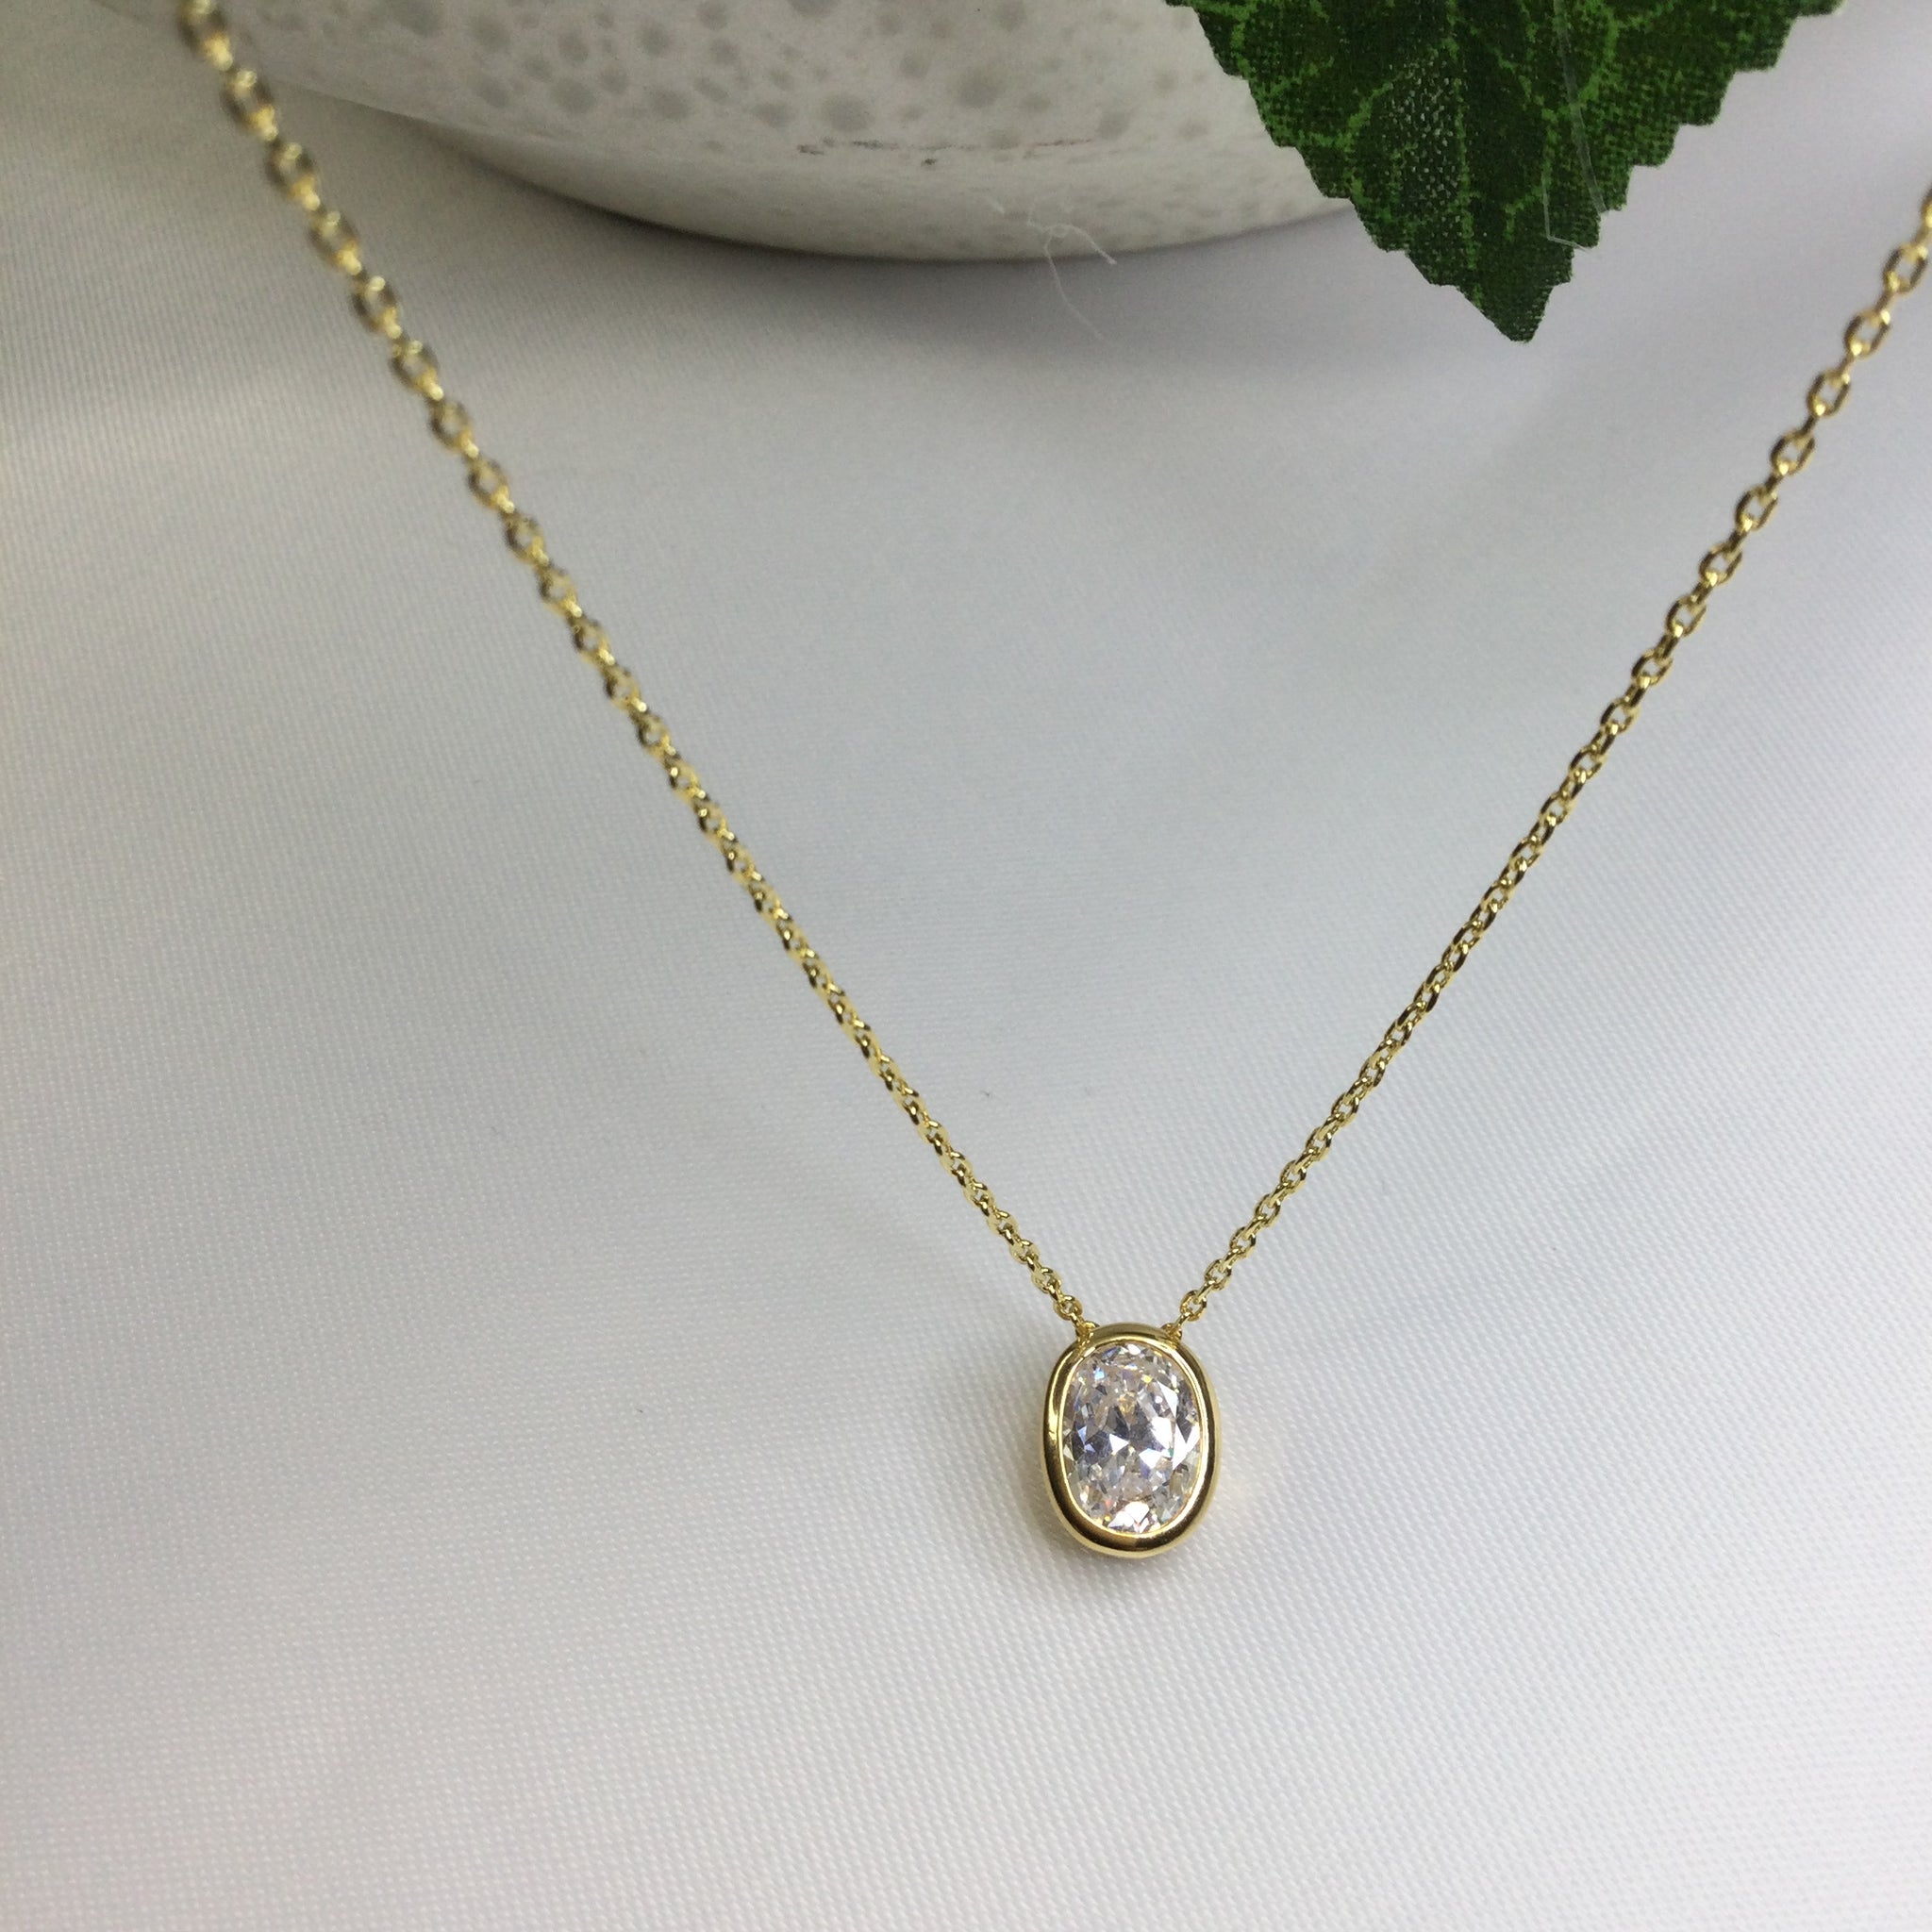 Oval Premium Crystal Necklace 18K Gold Filled